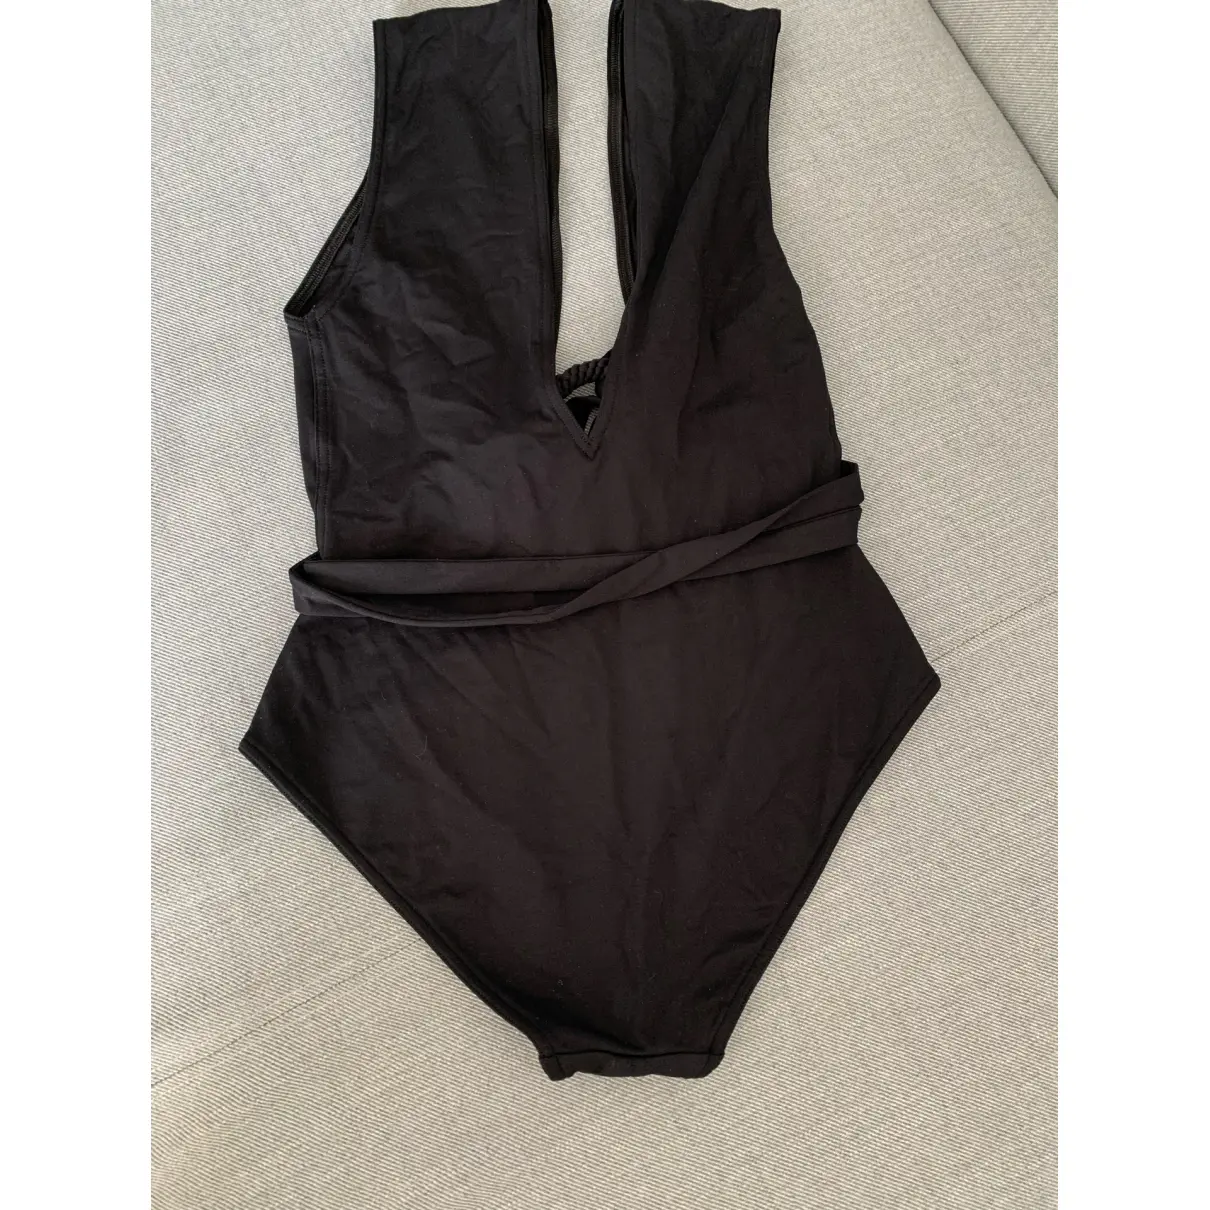 Buy Eres One-piece swimsuit online